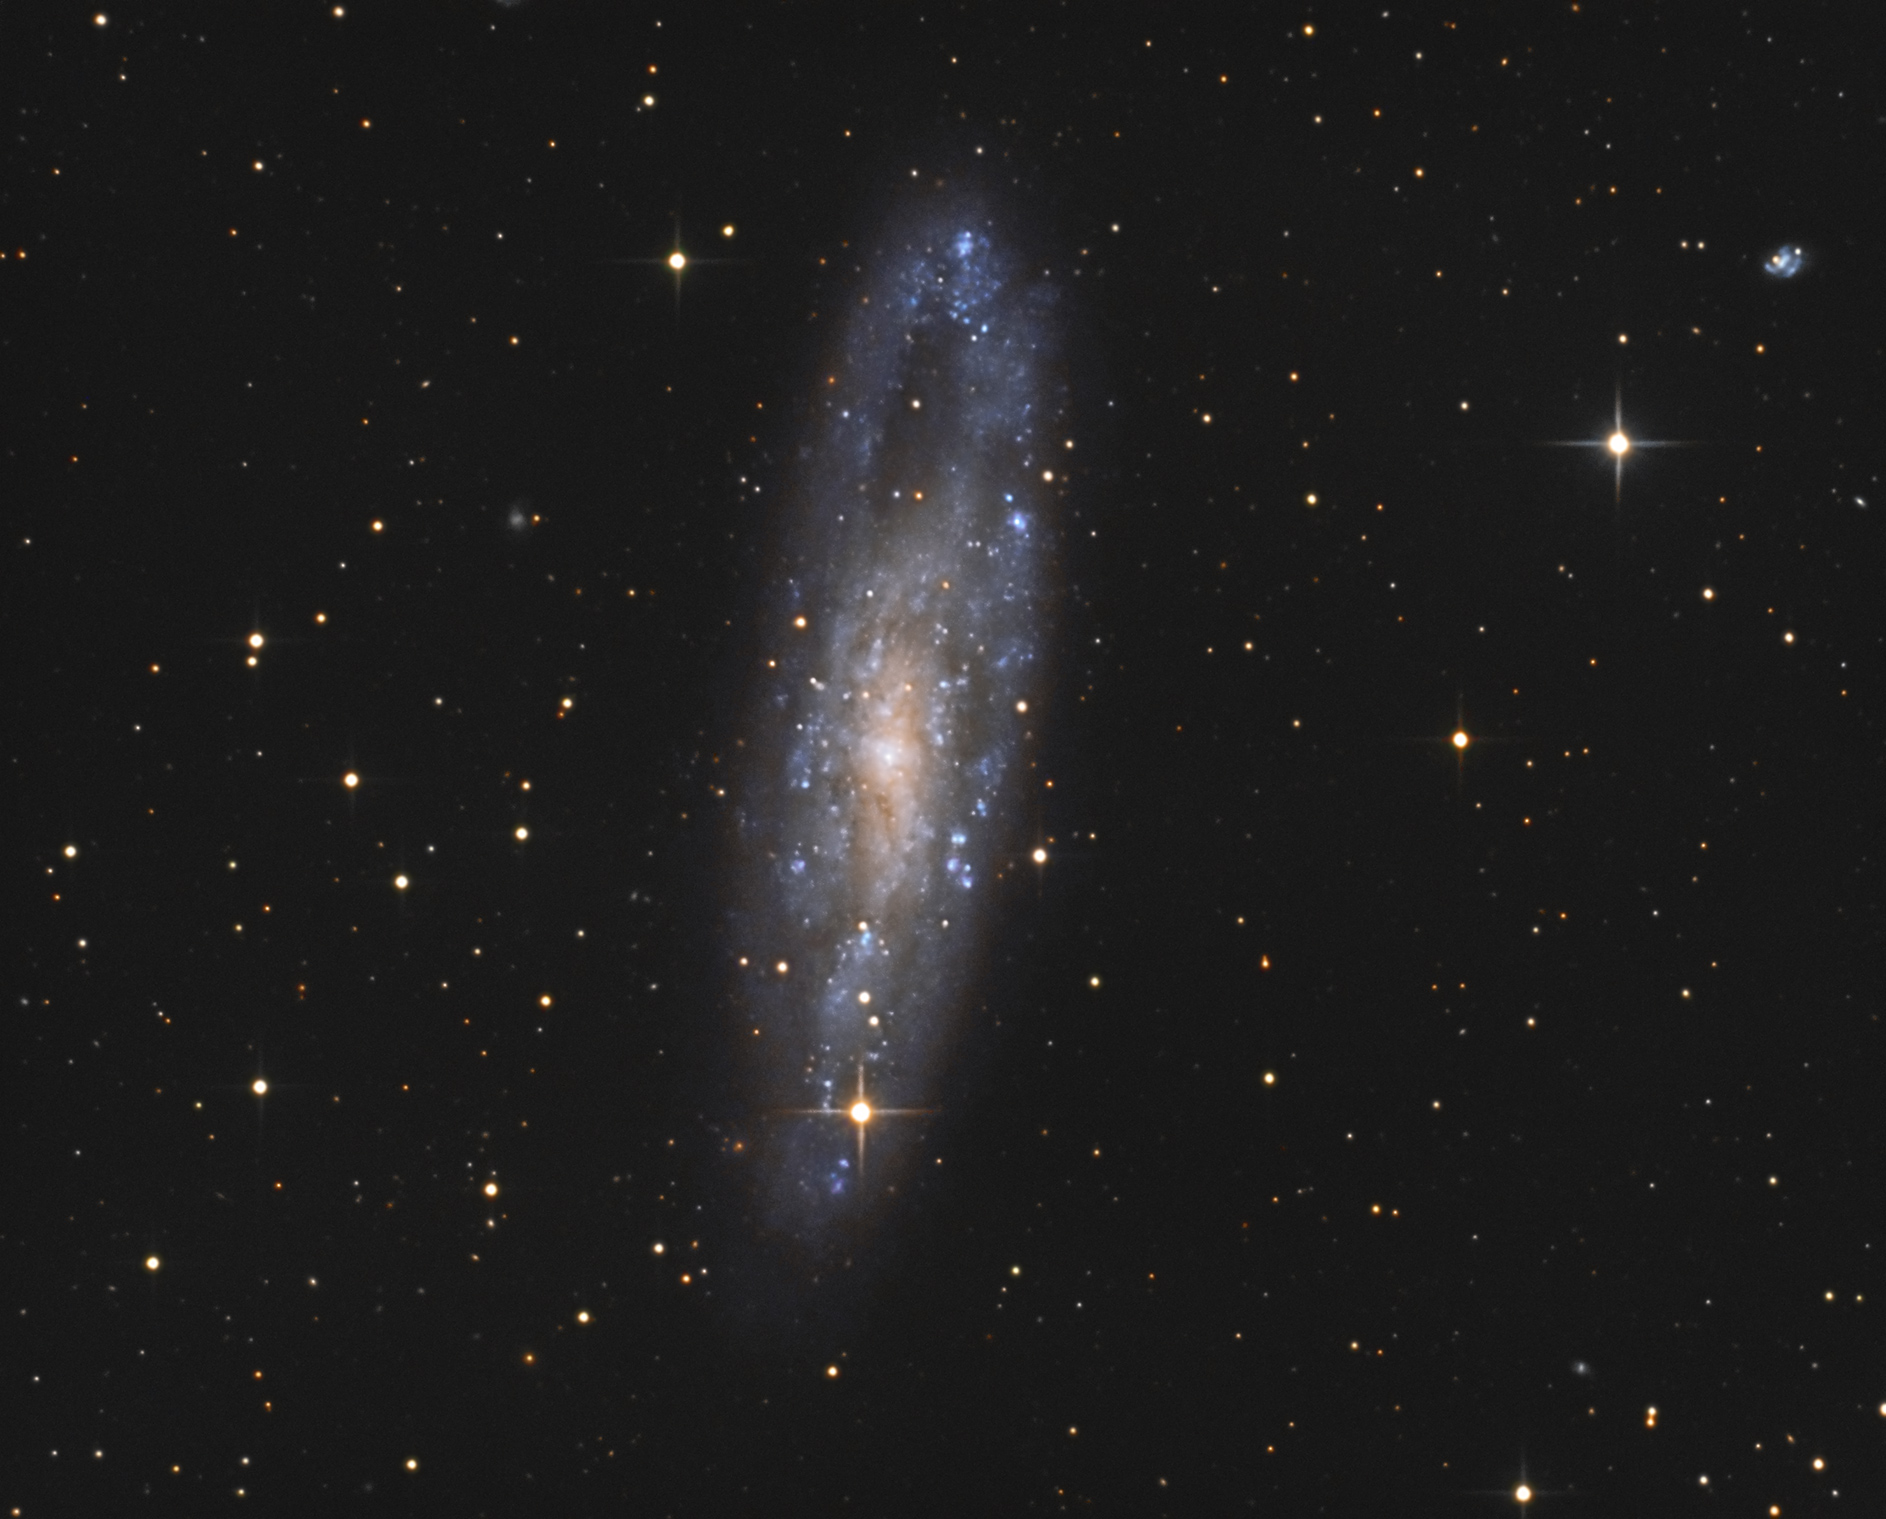 NGC247 Picture-fac40c418689d8748613ef25f6e0a3c3-original